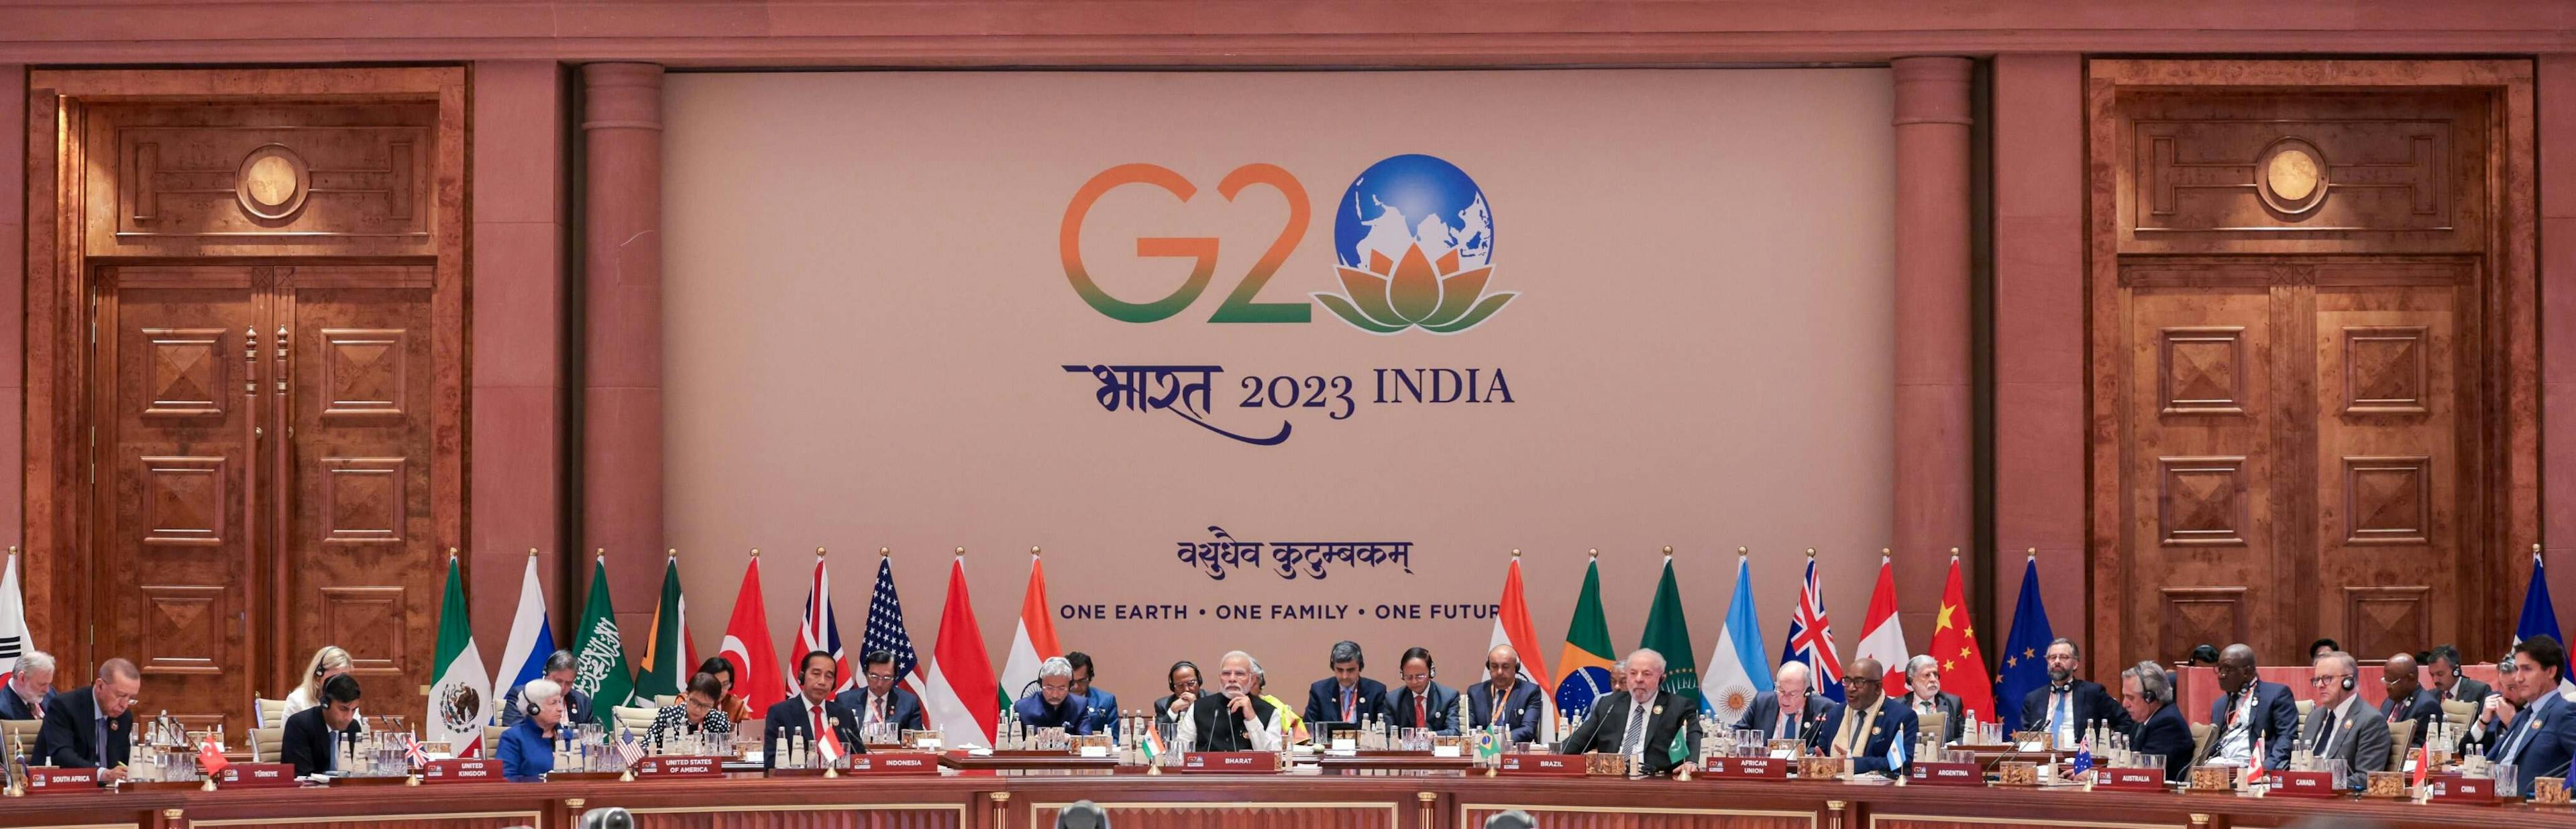 G20 Summit 2023 Held in Delhi